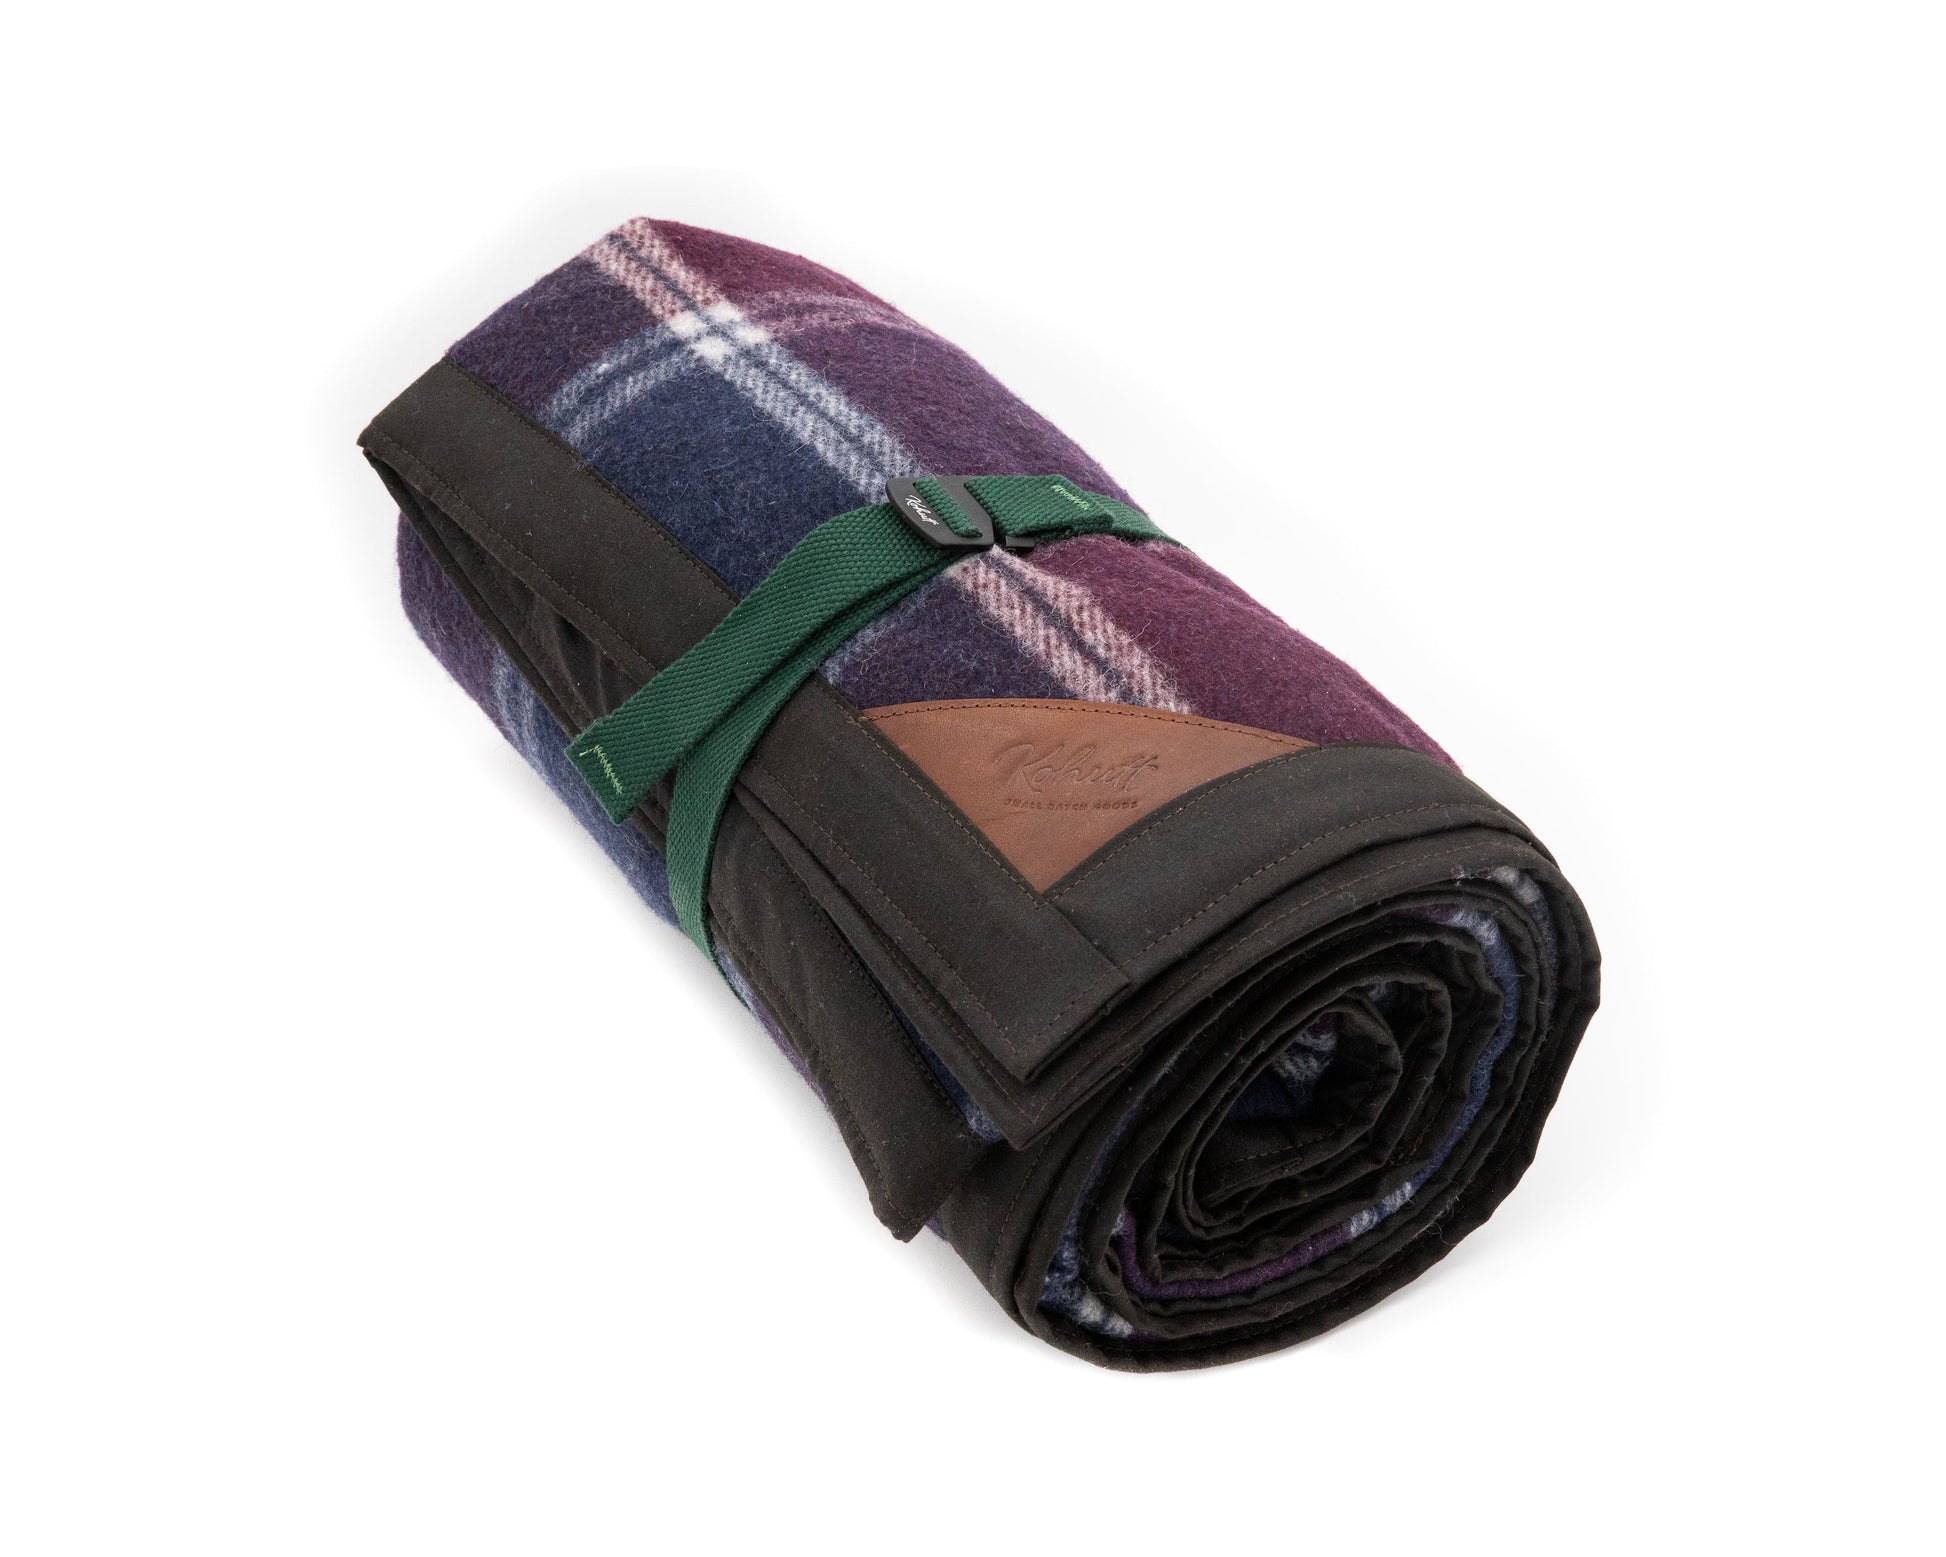 Oilskin & wool blanket in burgundy tartan - Kohutt™ | Enduring Handcrafted Goods